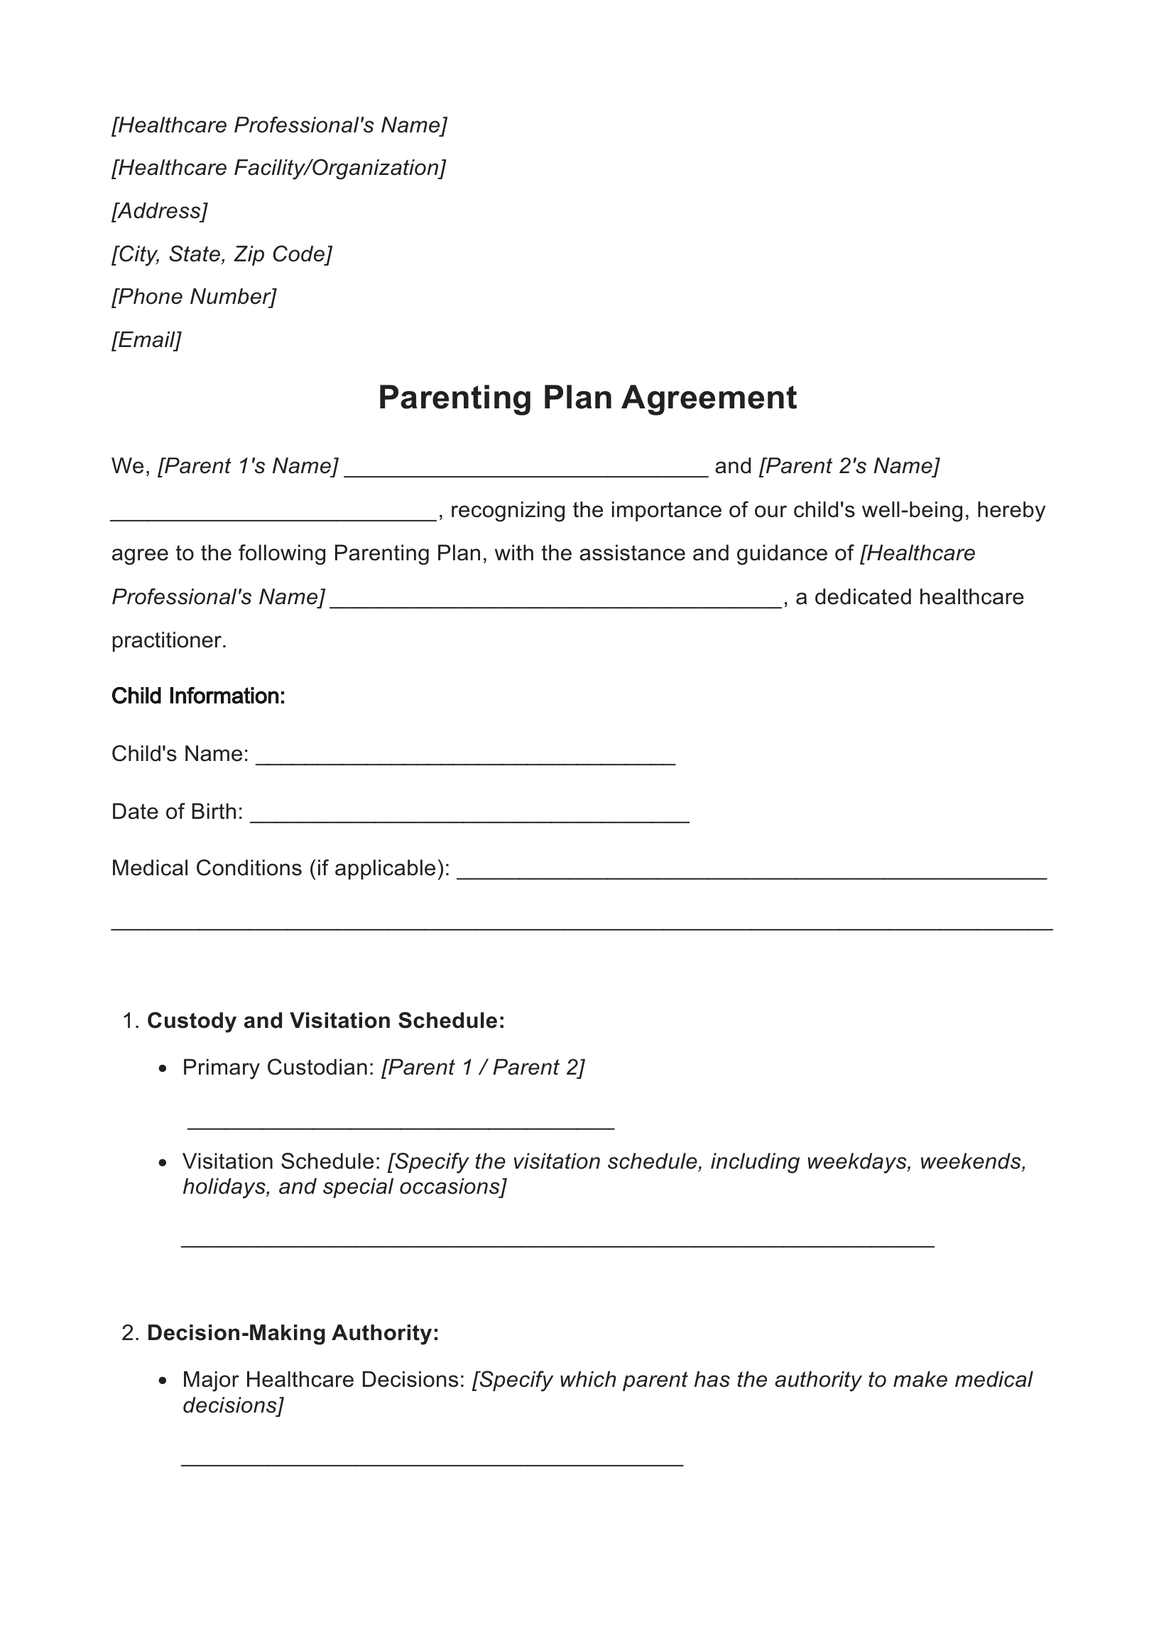 Parenting Plan PDF Example